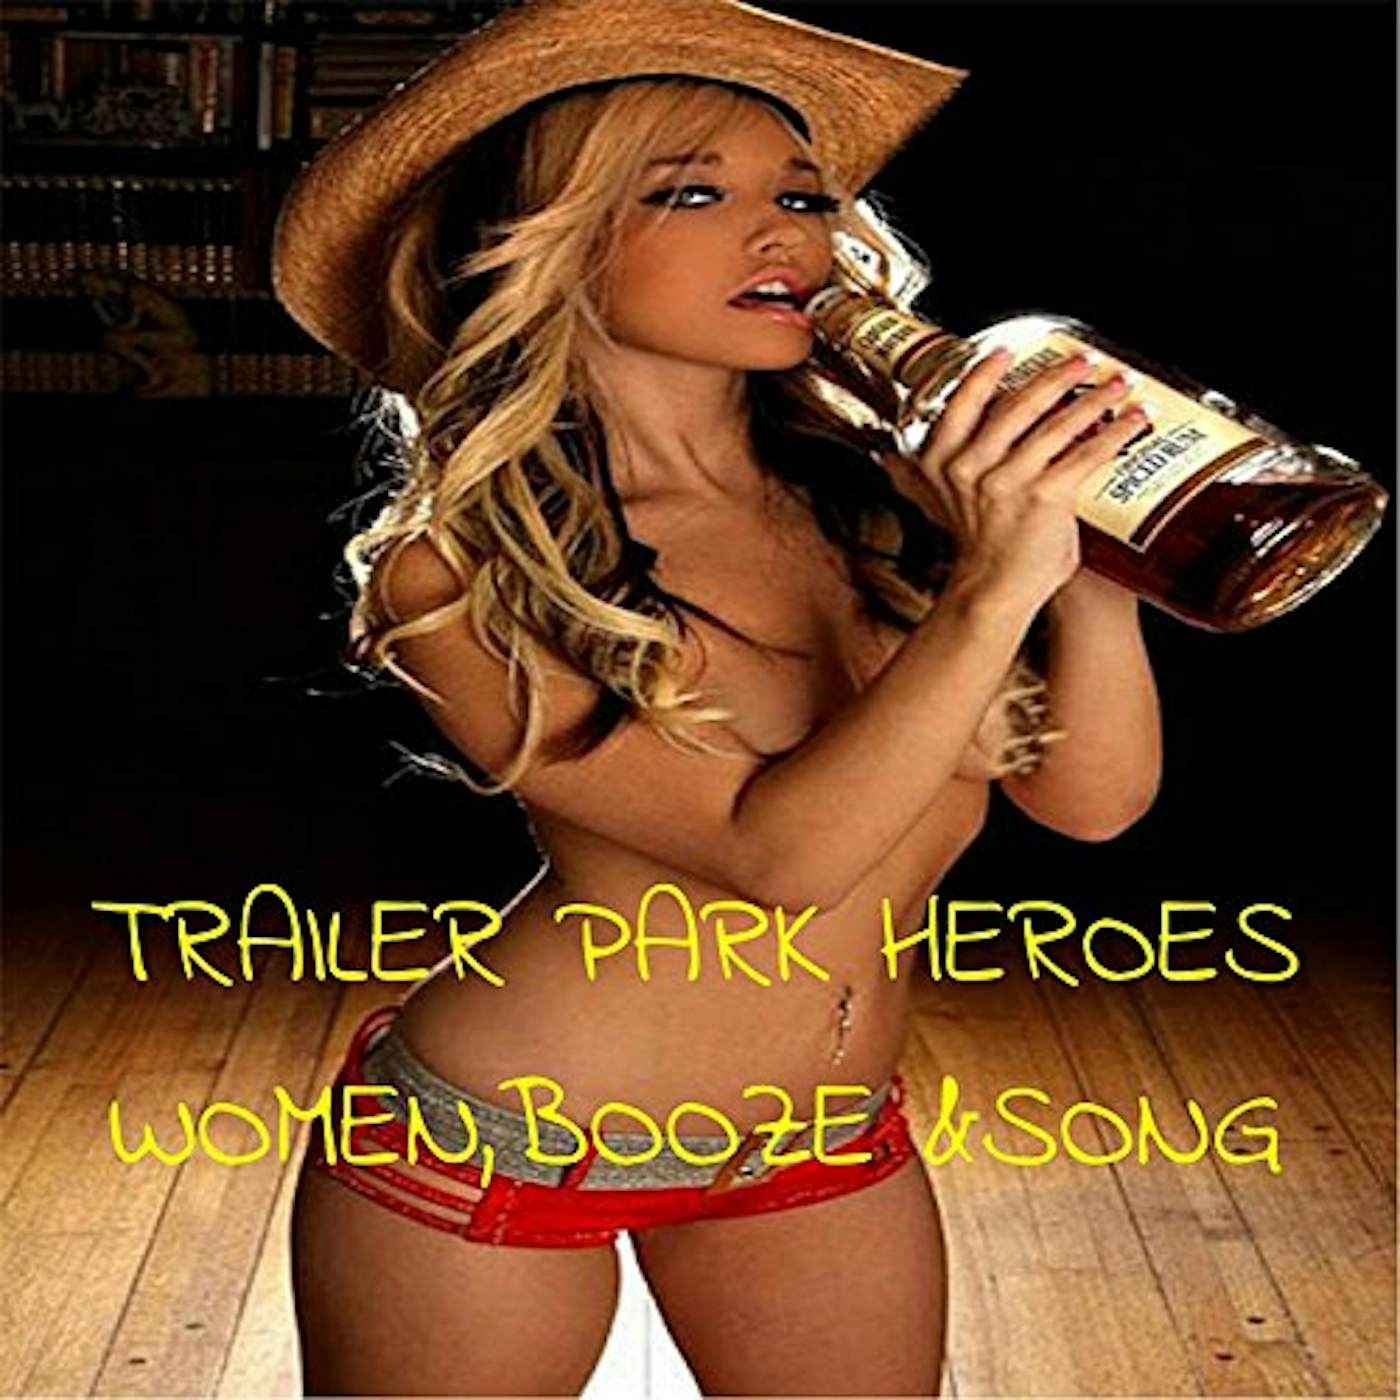 Trailer Park Heroes WOMEN BOOZE & SONG CD